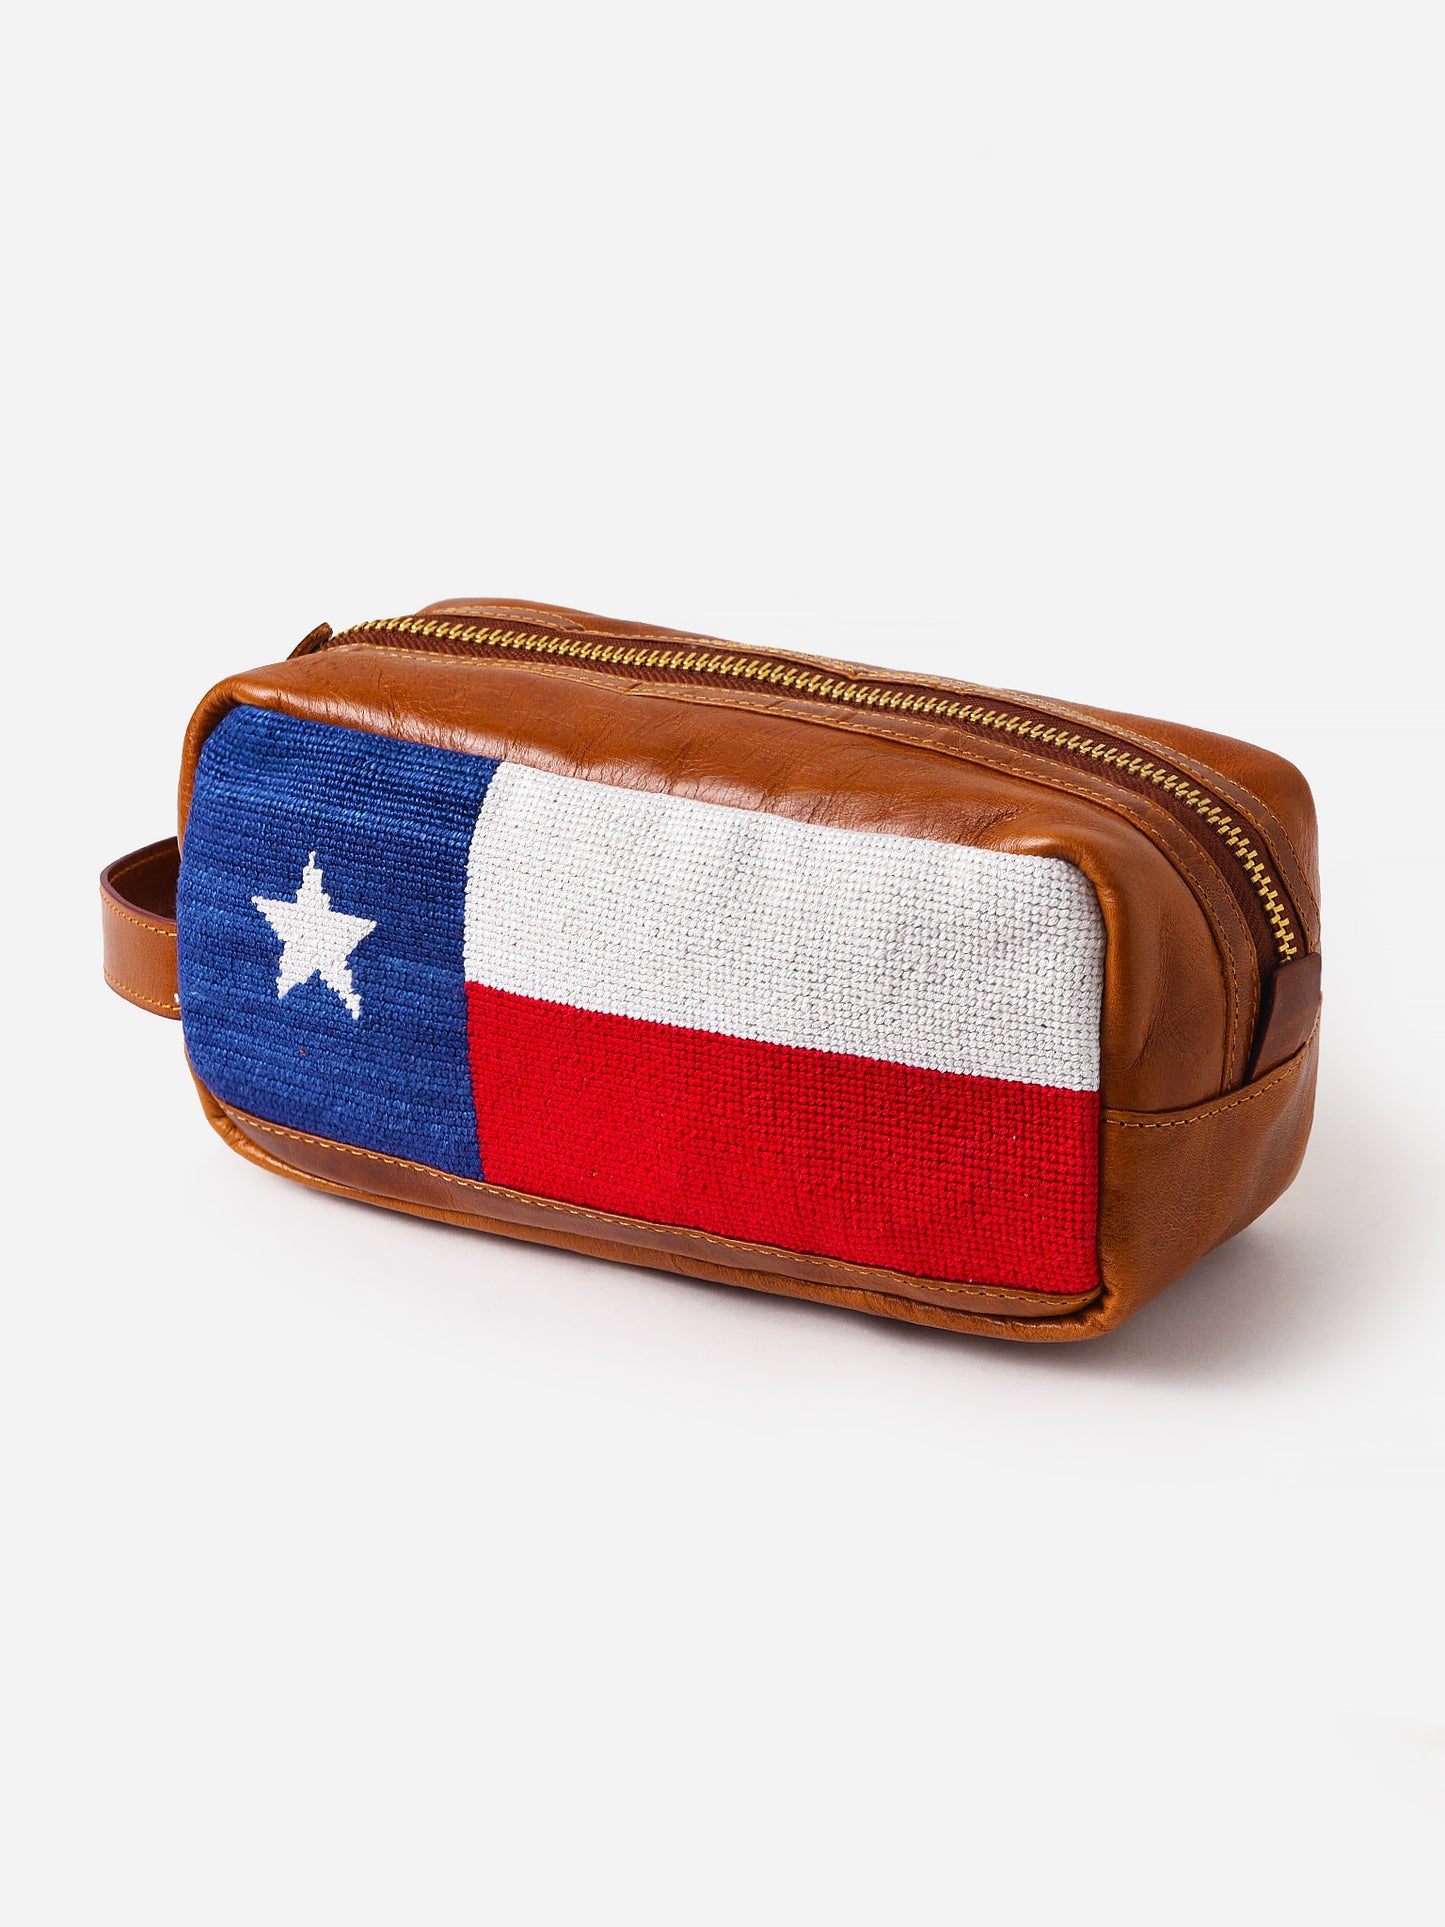 Smathers + Branson Big Texas Flag Needlepoint Toiletry Bag